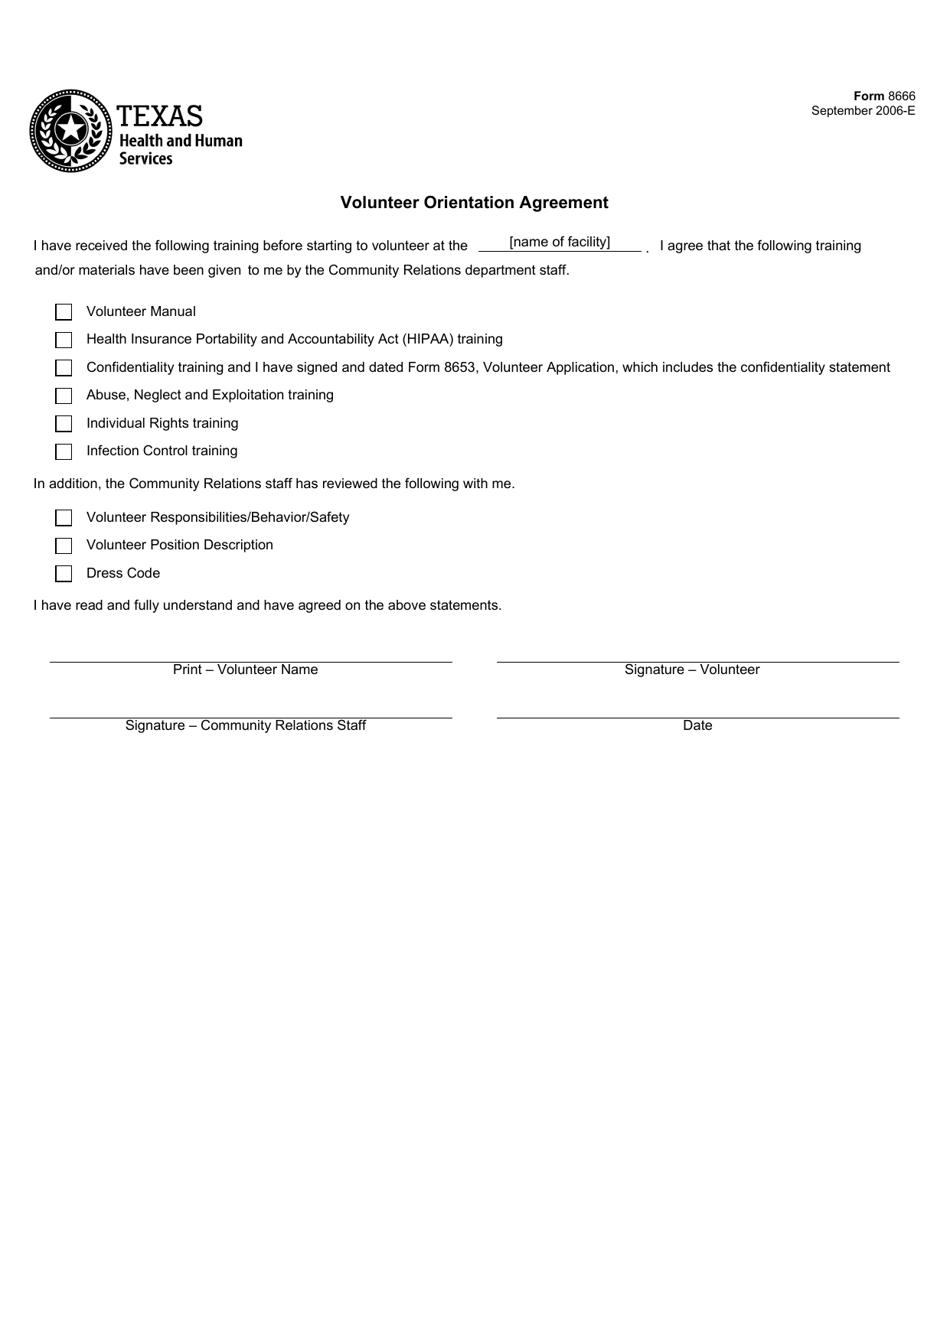 Form 8666 Volunteer Orientation Agreement - Texas, Page 1